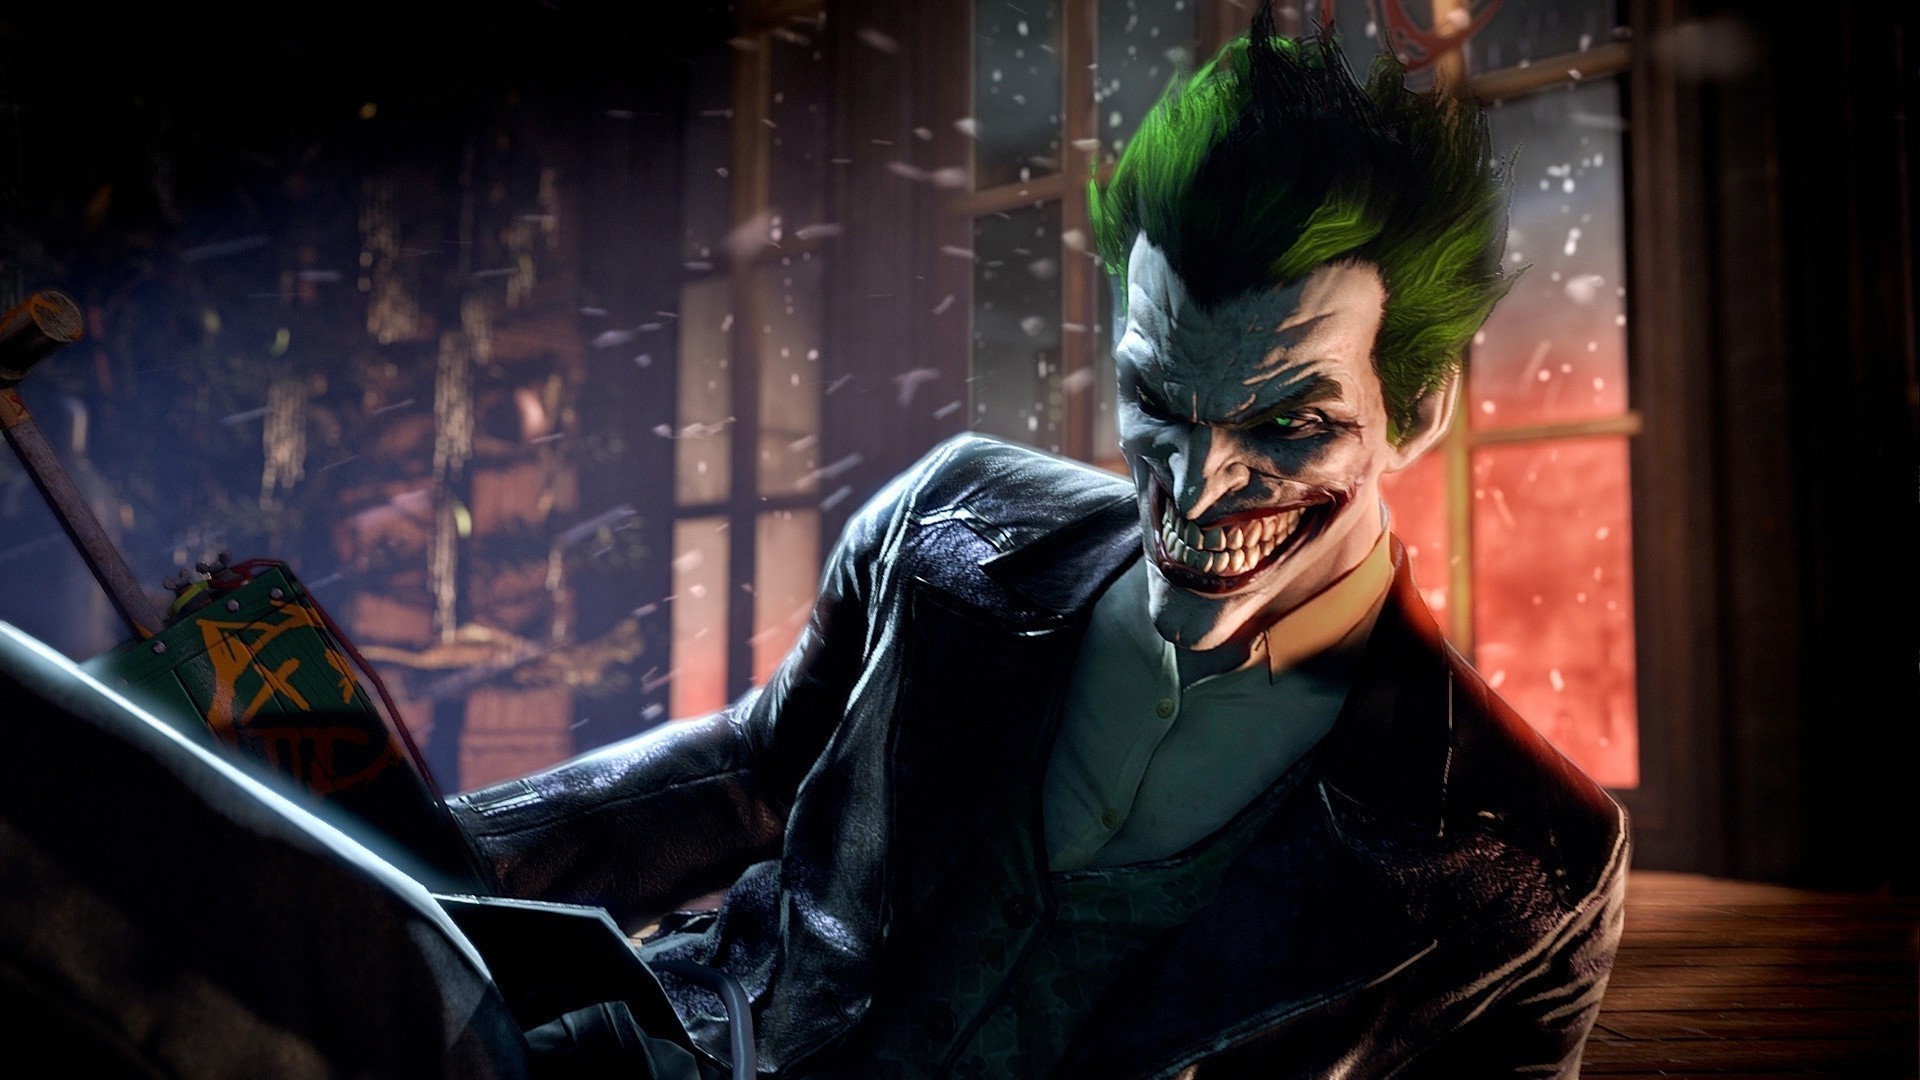 The Joker Batman Arkham Origins Hd Wallpaper 1920x1080 1920x1080